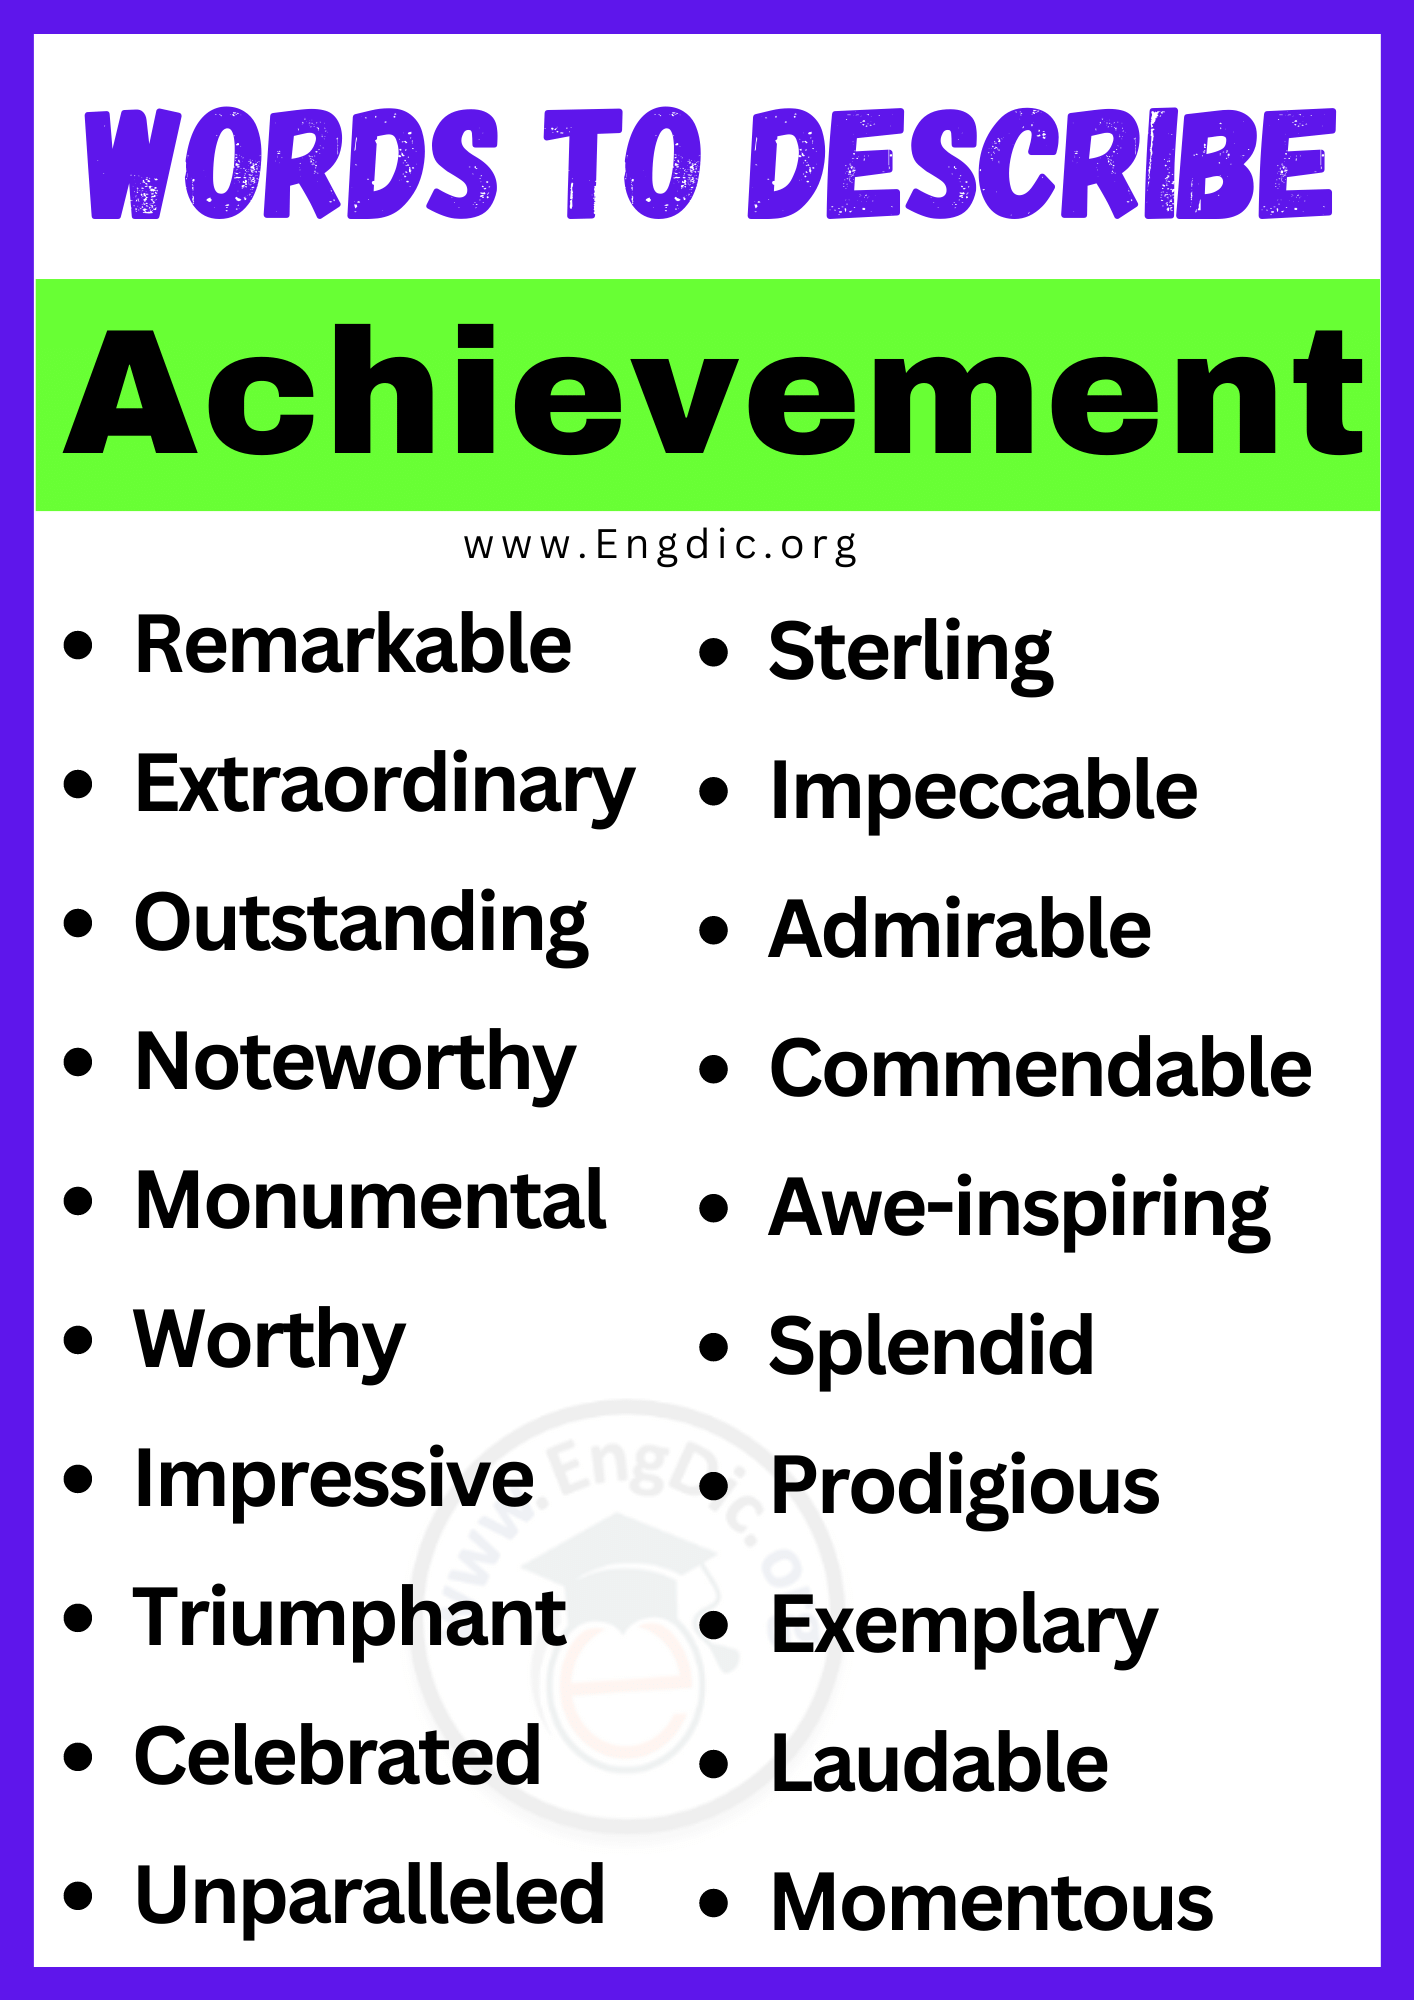 Words to Describe Achievement